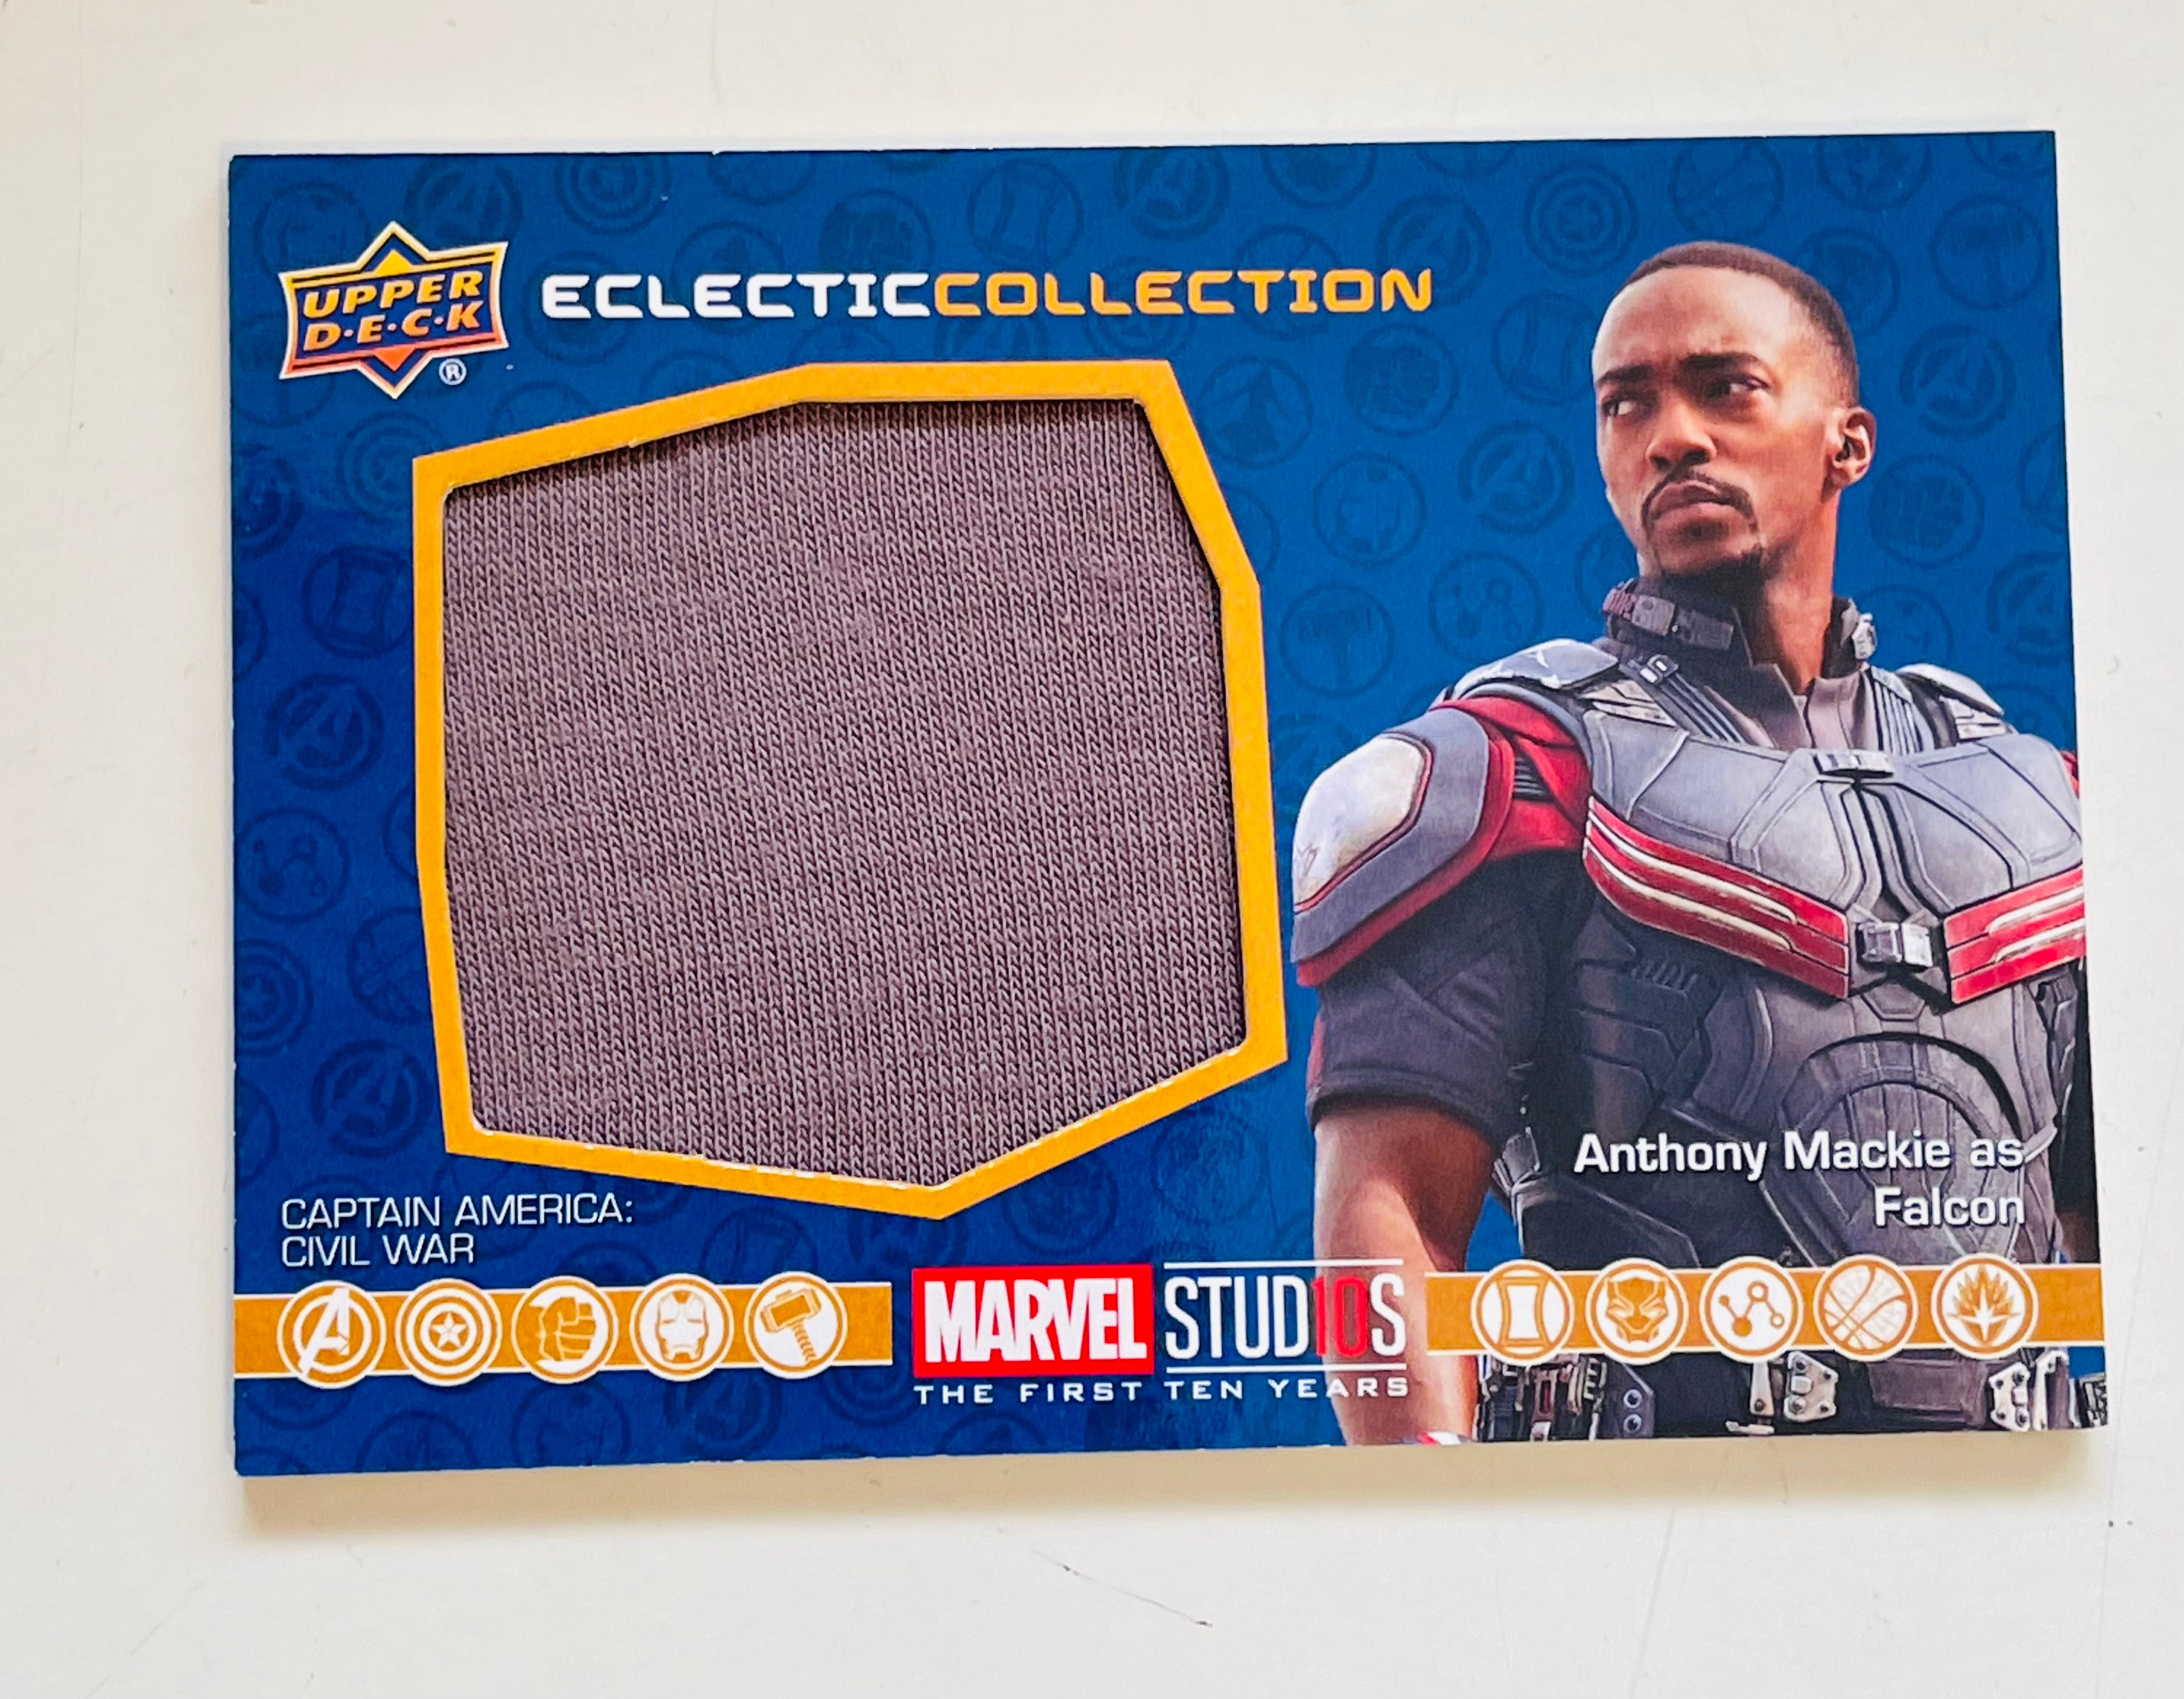 Marvel movie Falcon Anthony Mackie memorabilia insert card